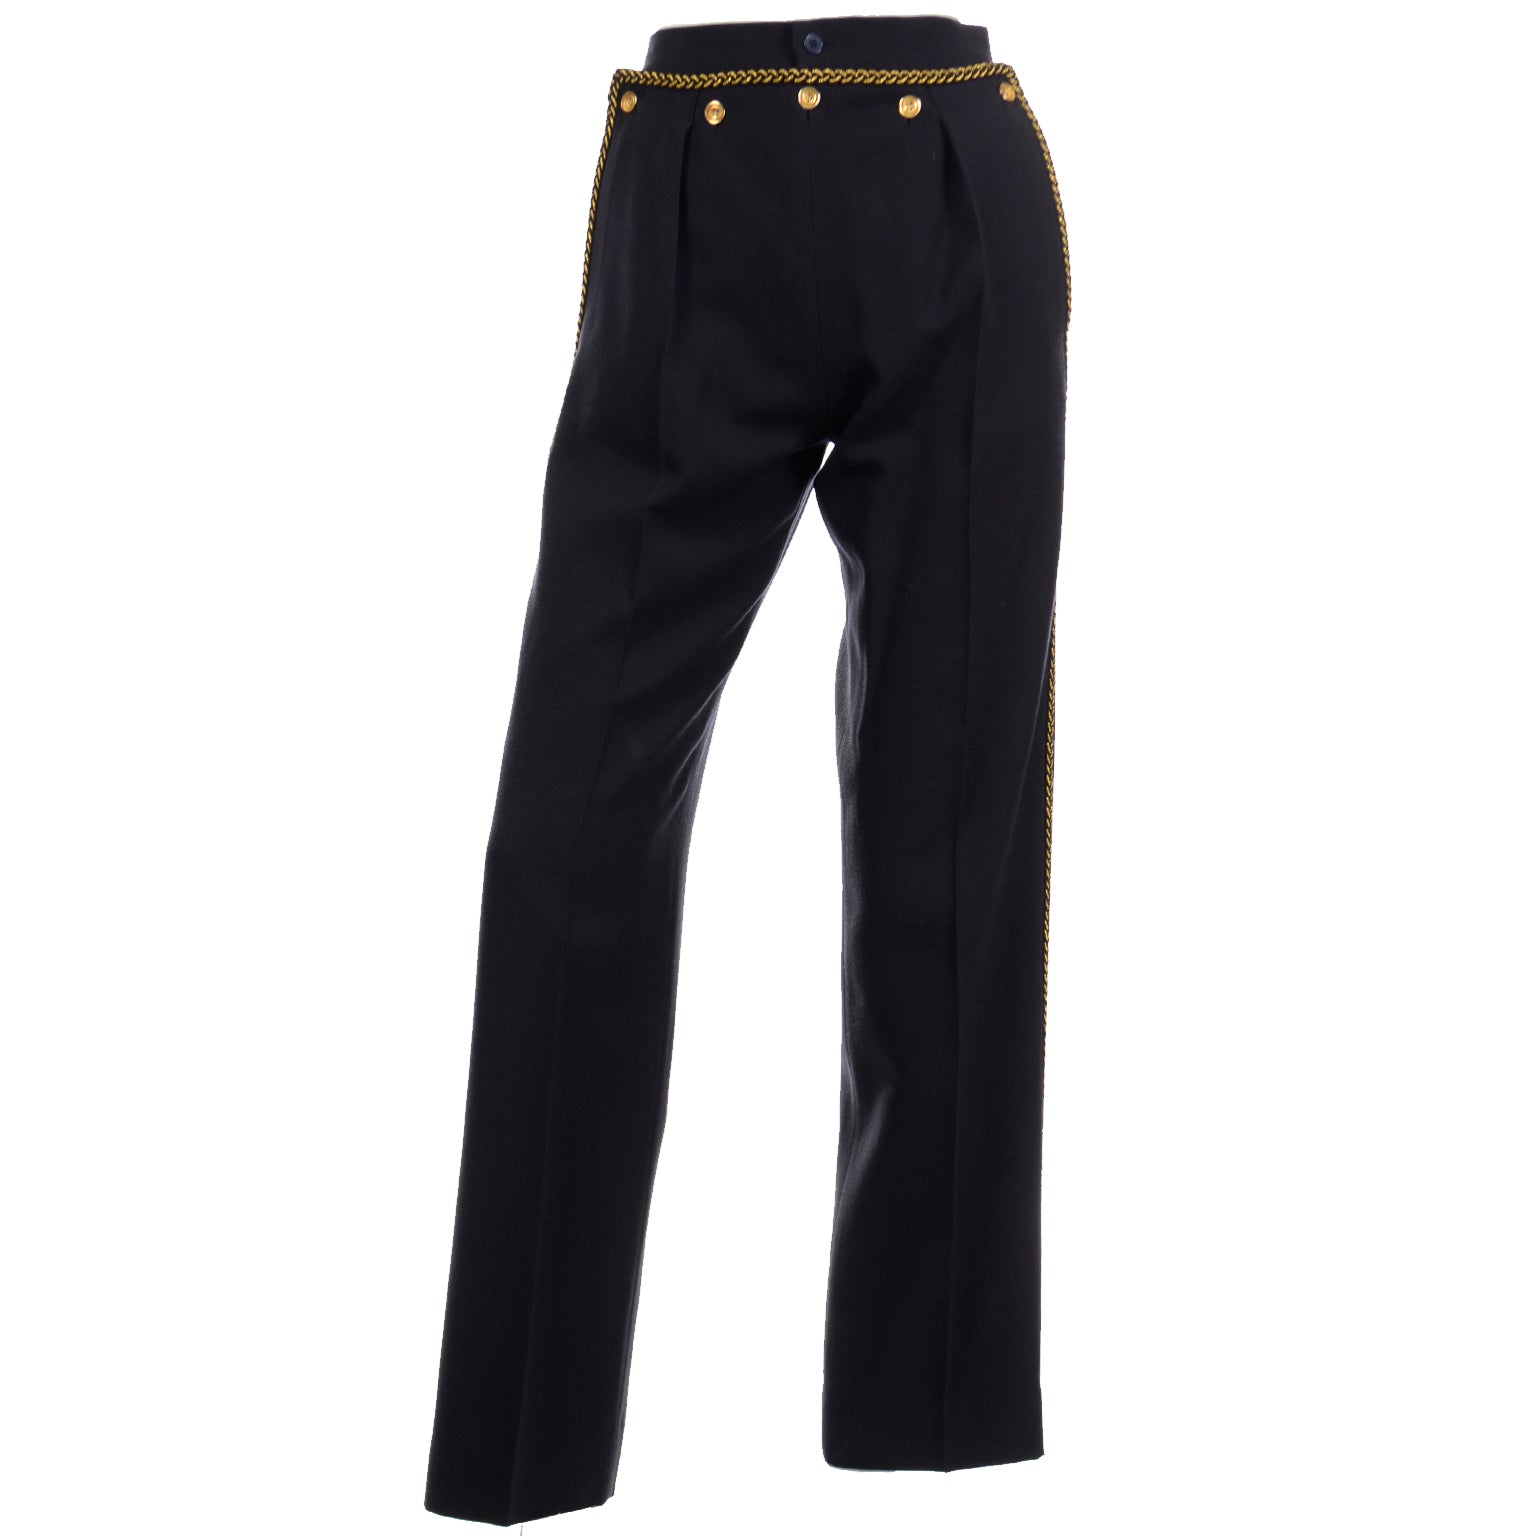 Yves Saint Laurent Pants & Trousers for Sale at Auction